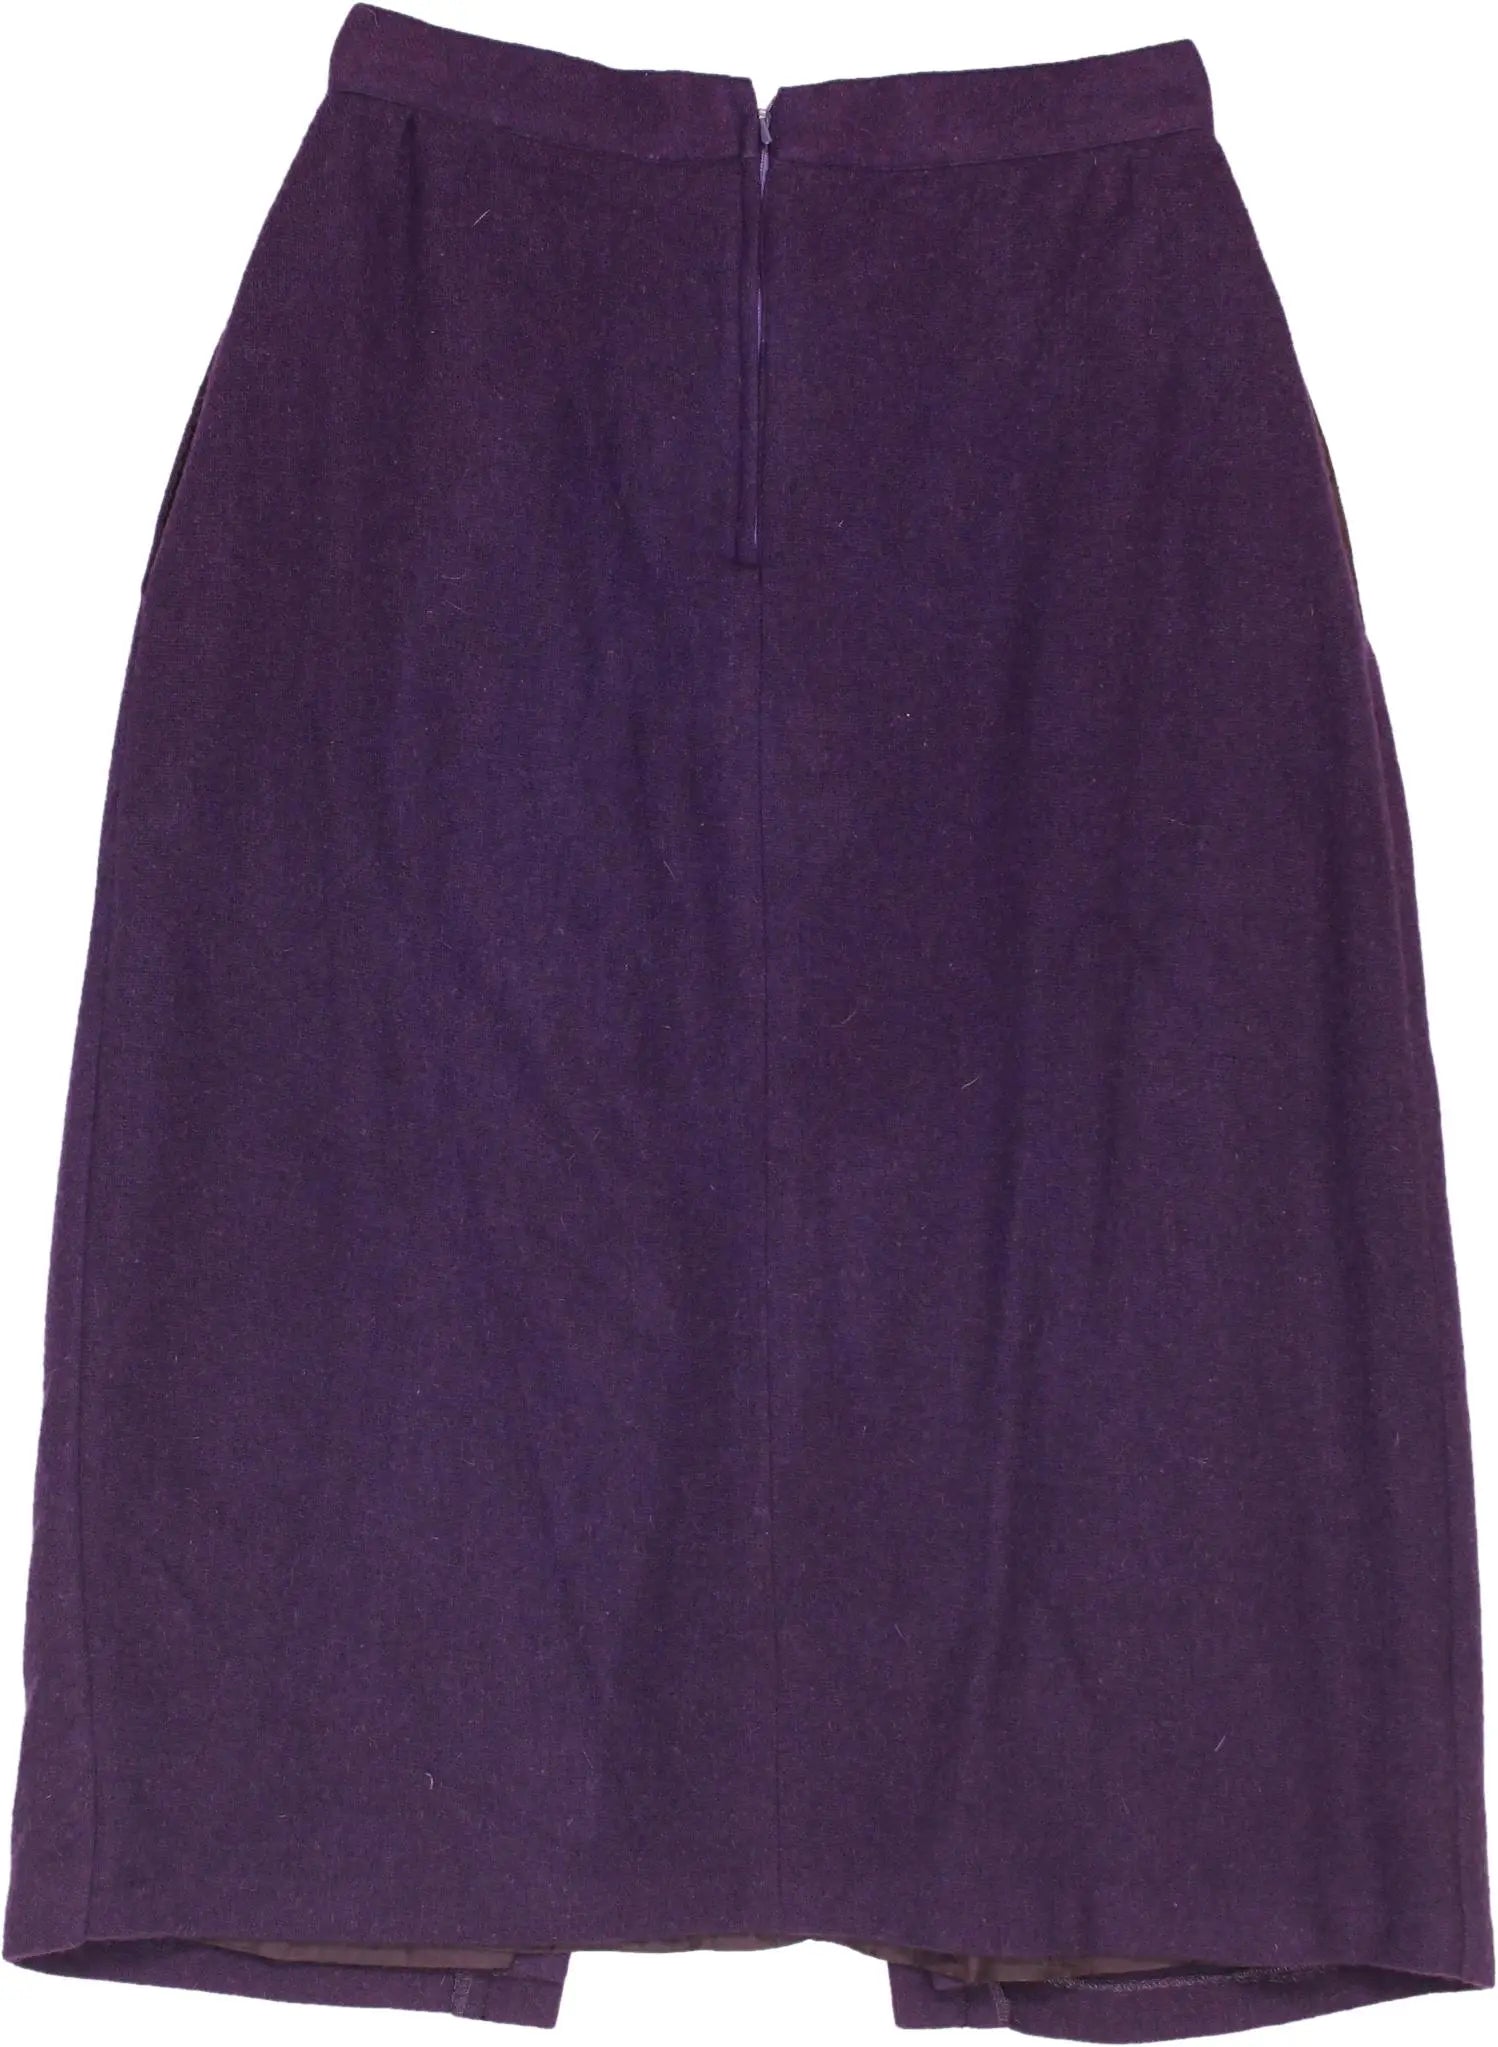 Ferrucio - Purple midi skirt- ThriftTale.com - Vintage and second handclothing